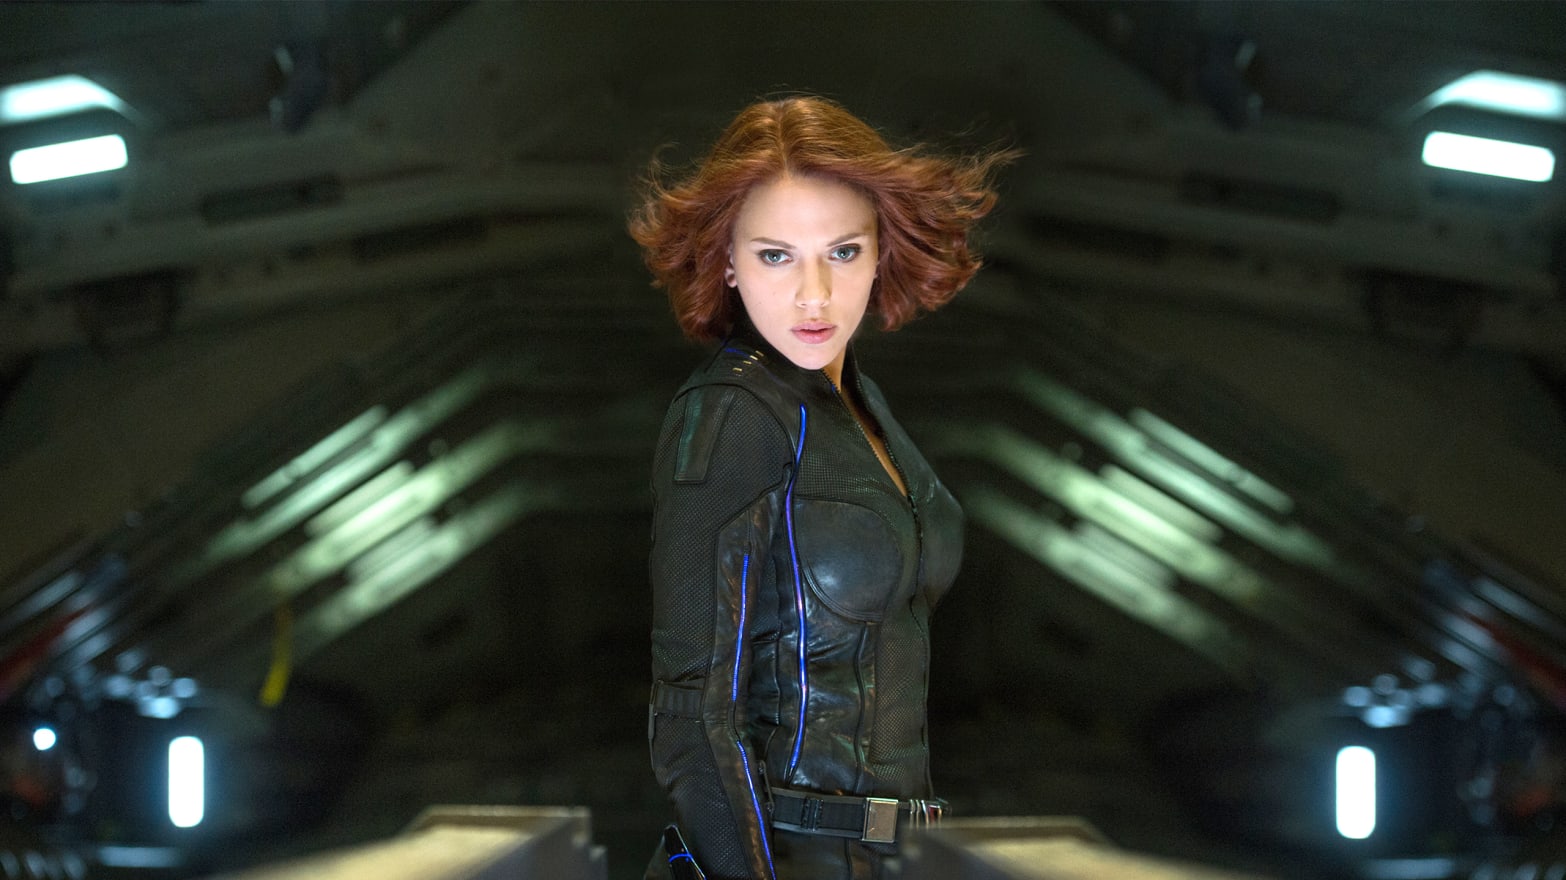 The Avengers Black Widow Problem How Marvel Slut-Shamed Their Most Badass Superheroine picture